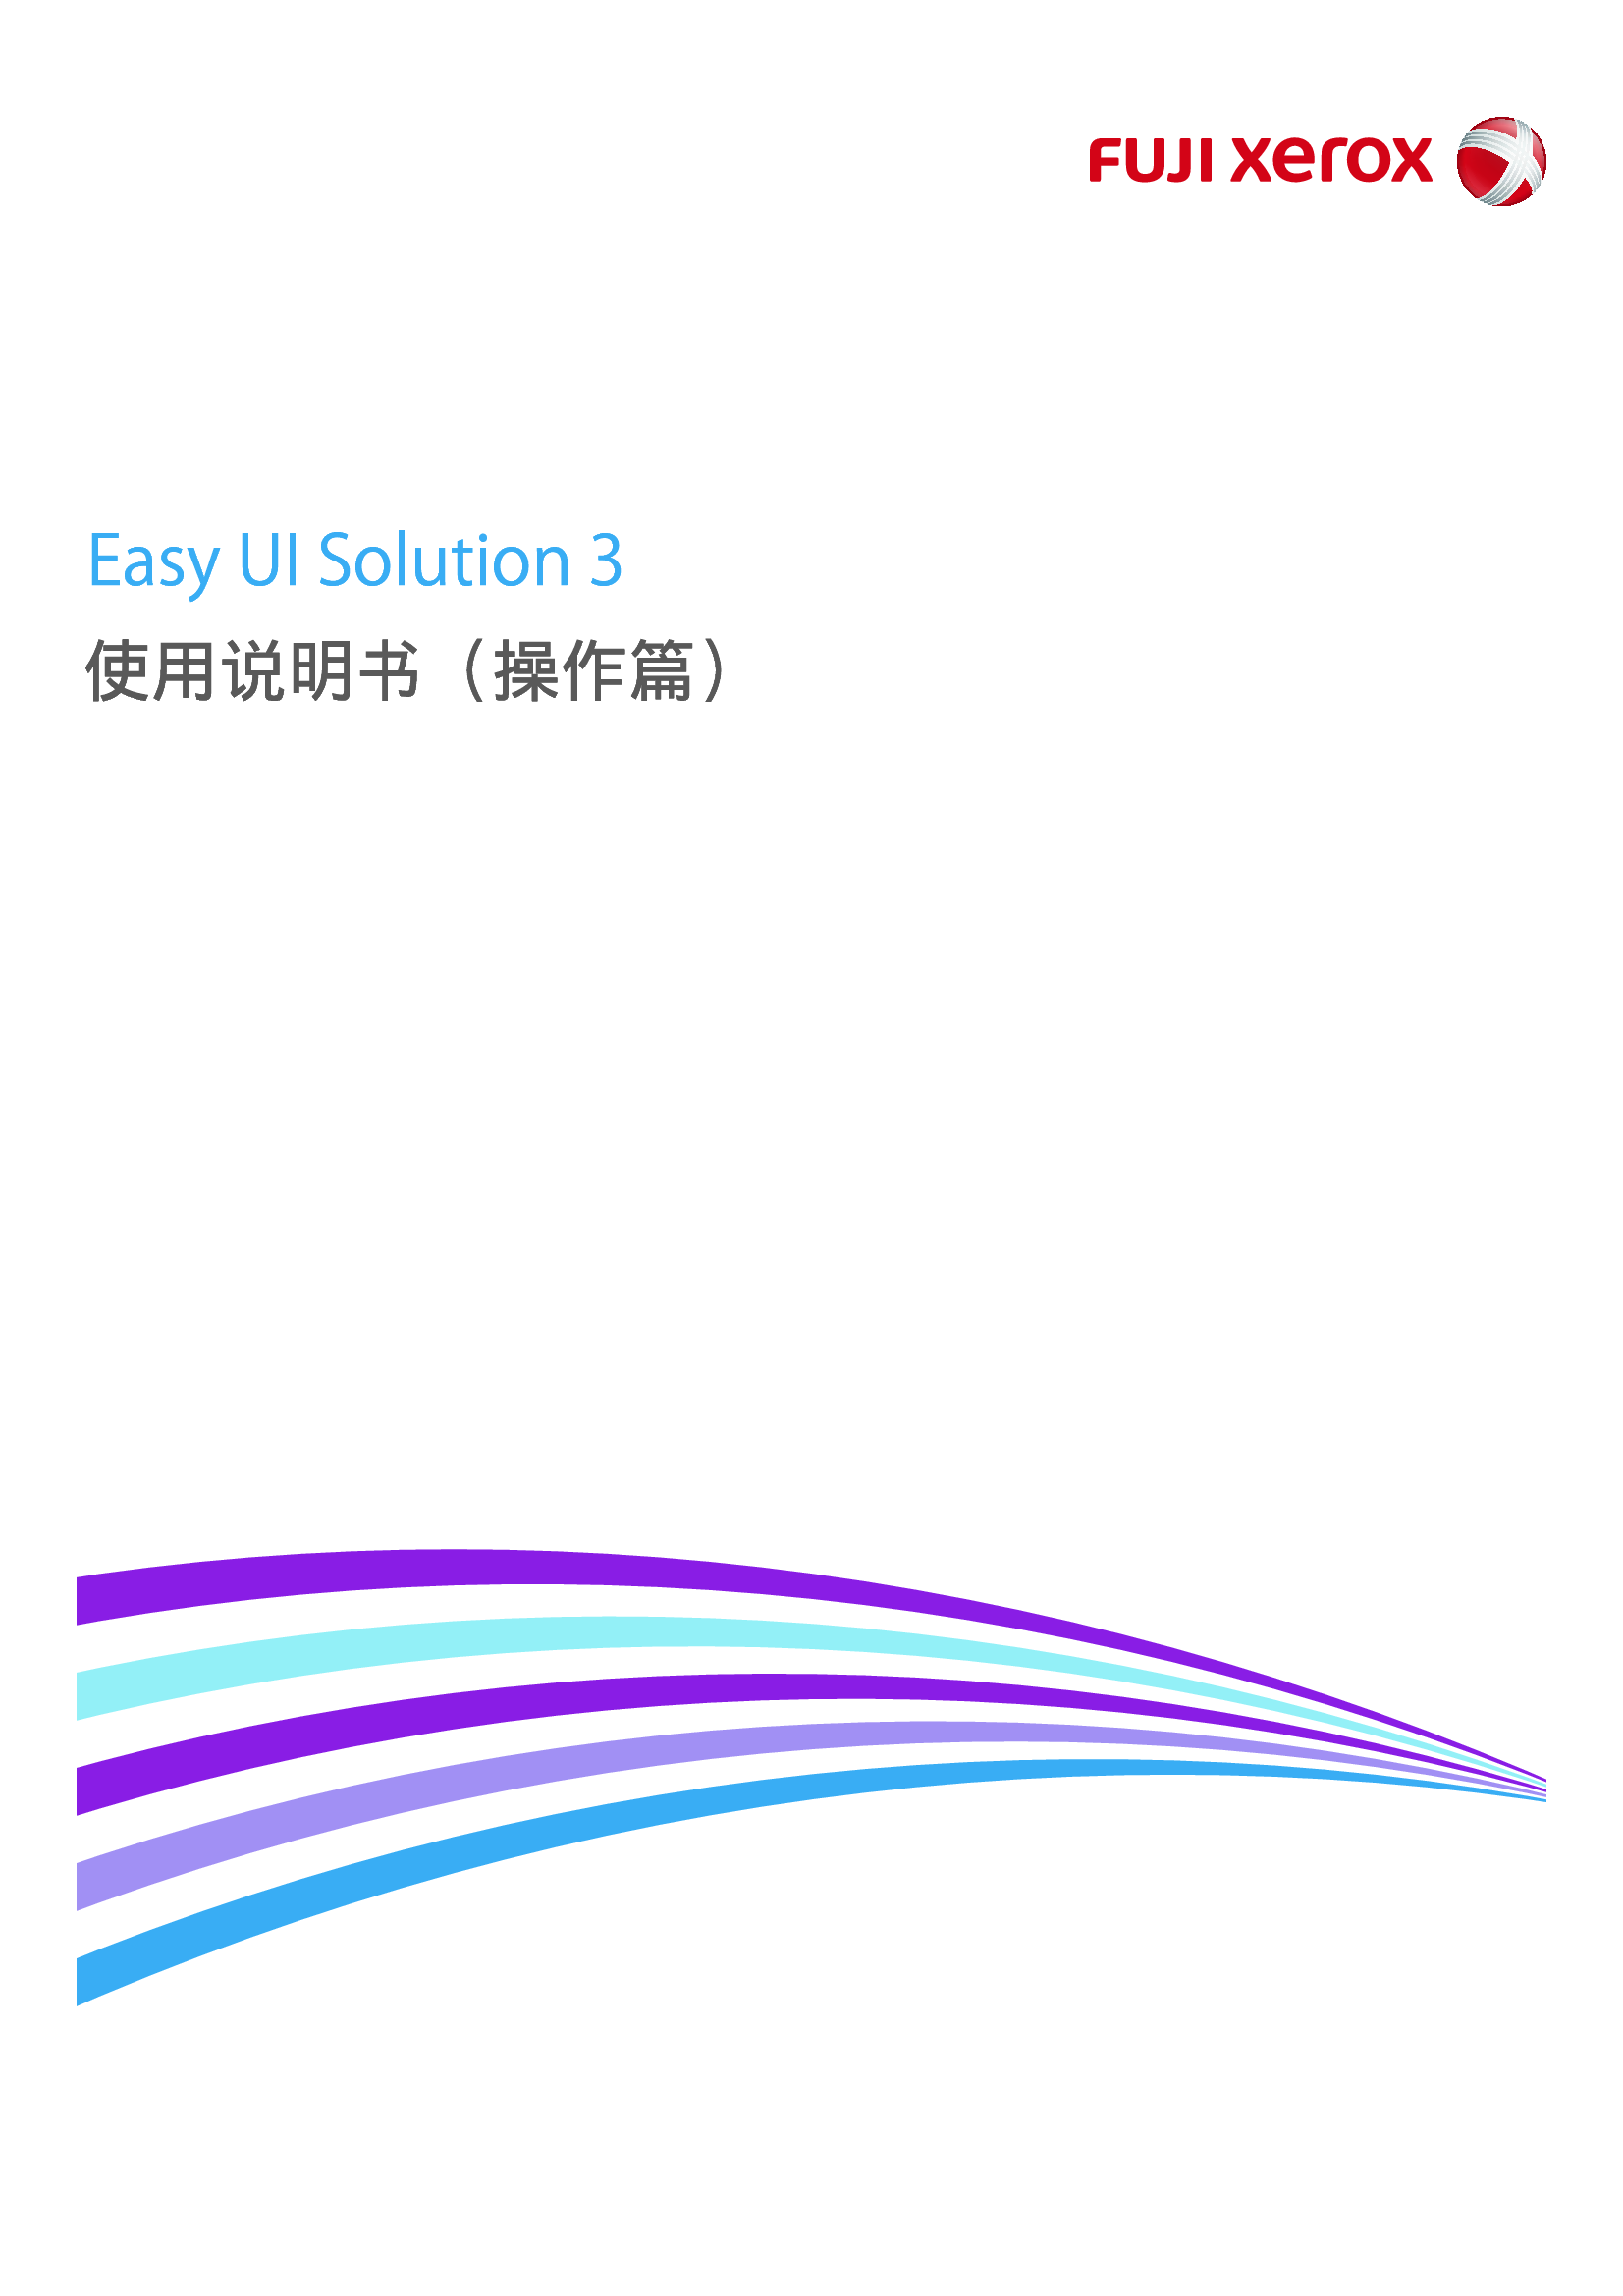 富士施乐 Fuji Xerox Easy UI Solution 3 使用说明书 封面